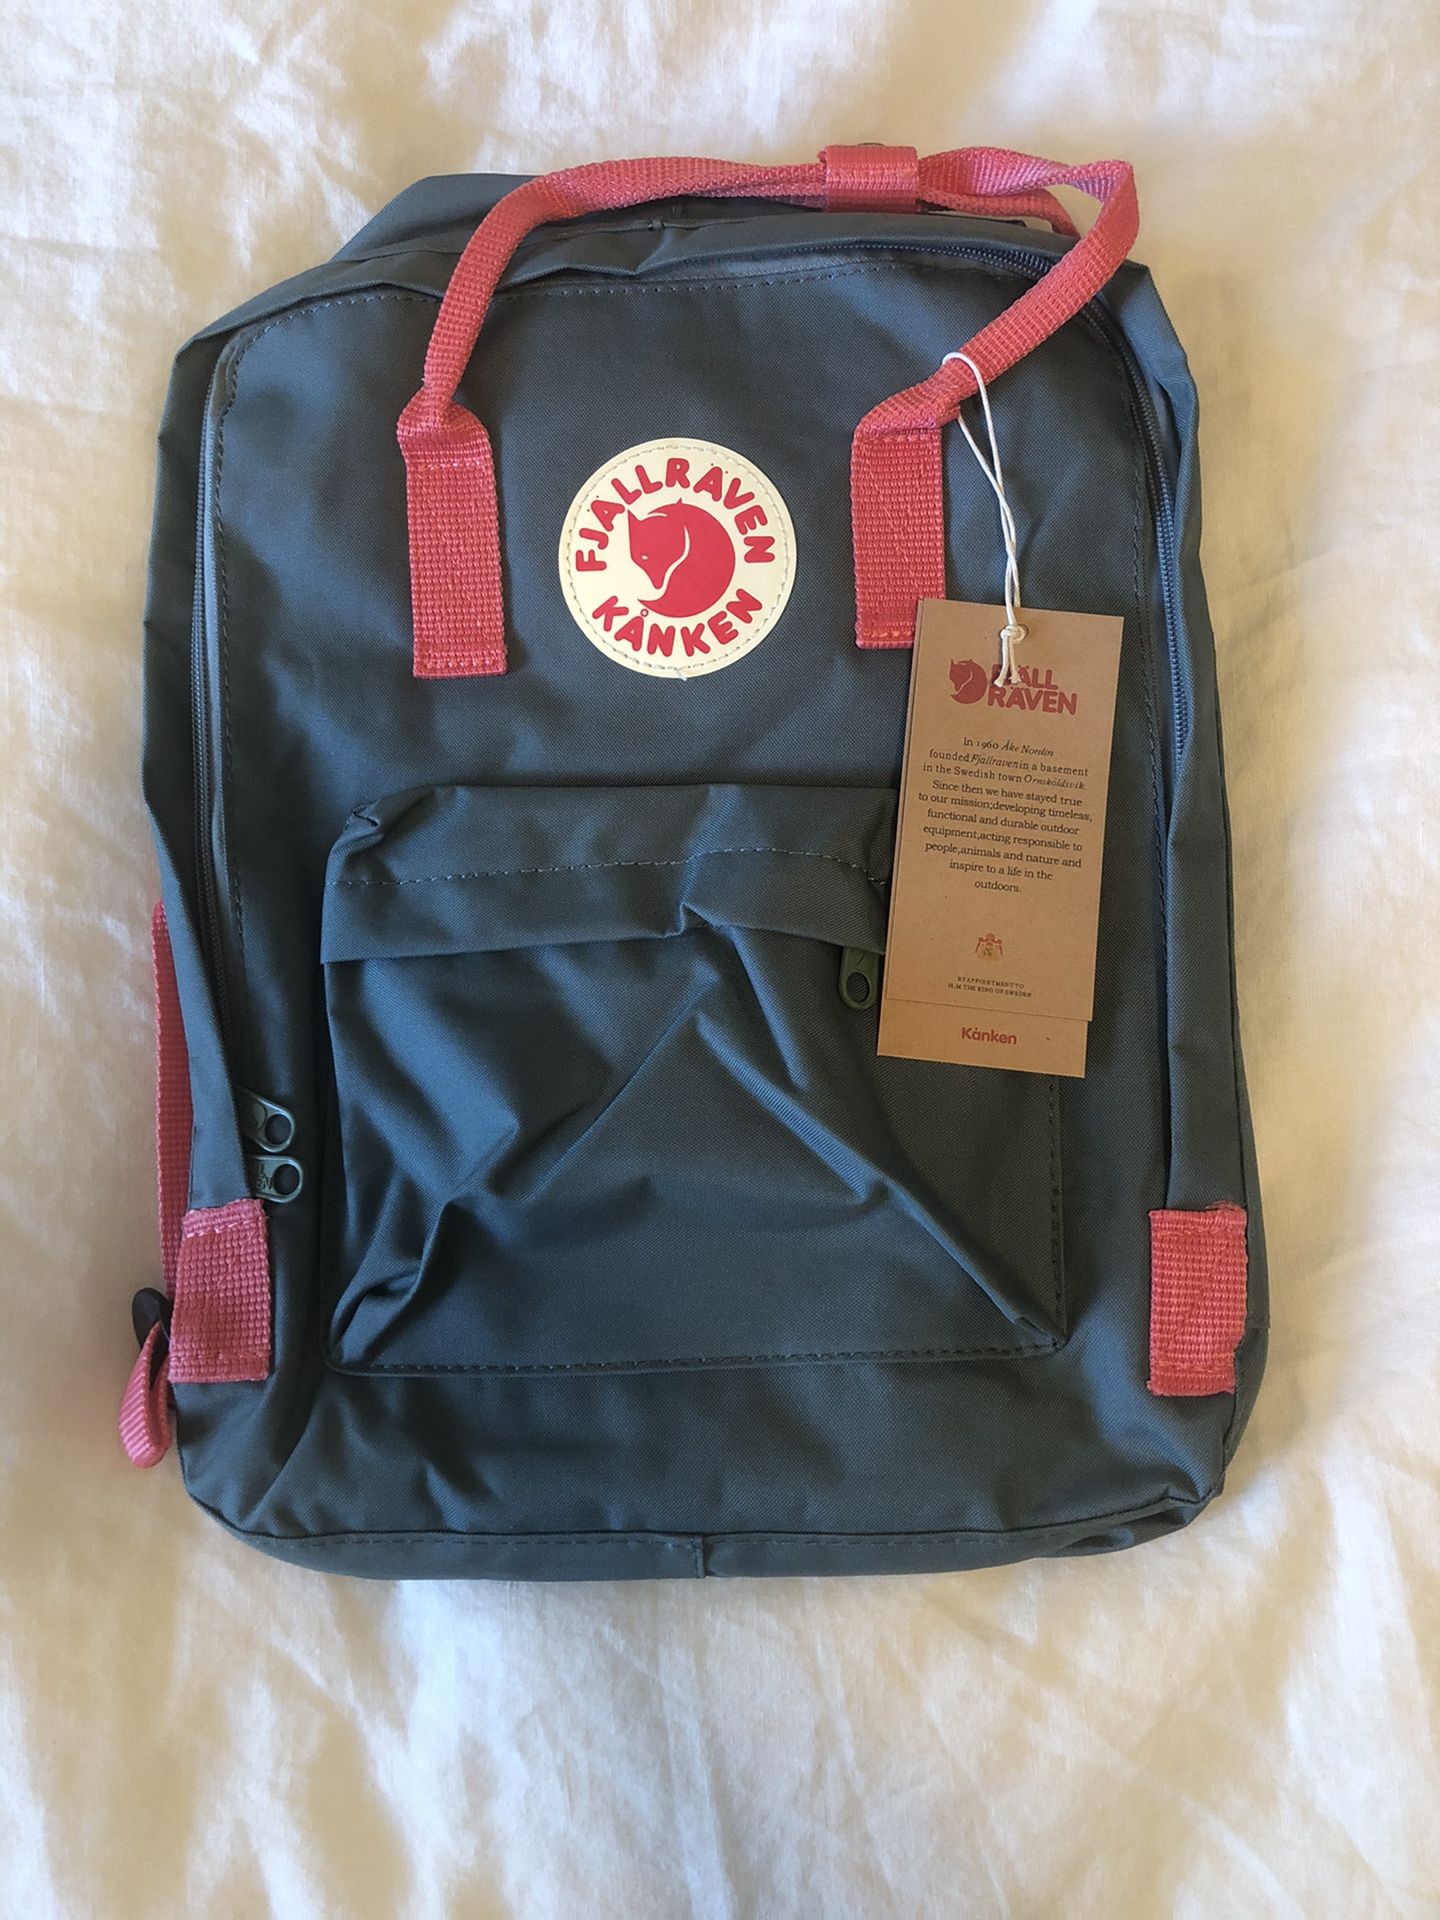 Backpack - Brand New!